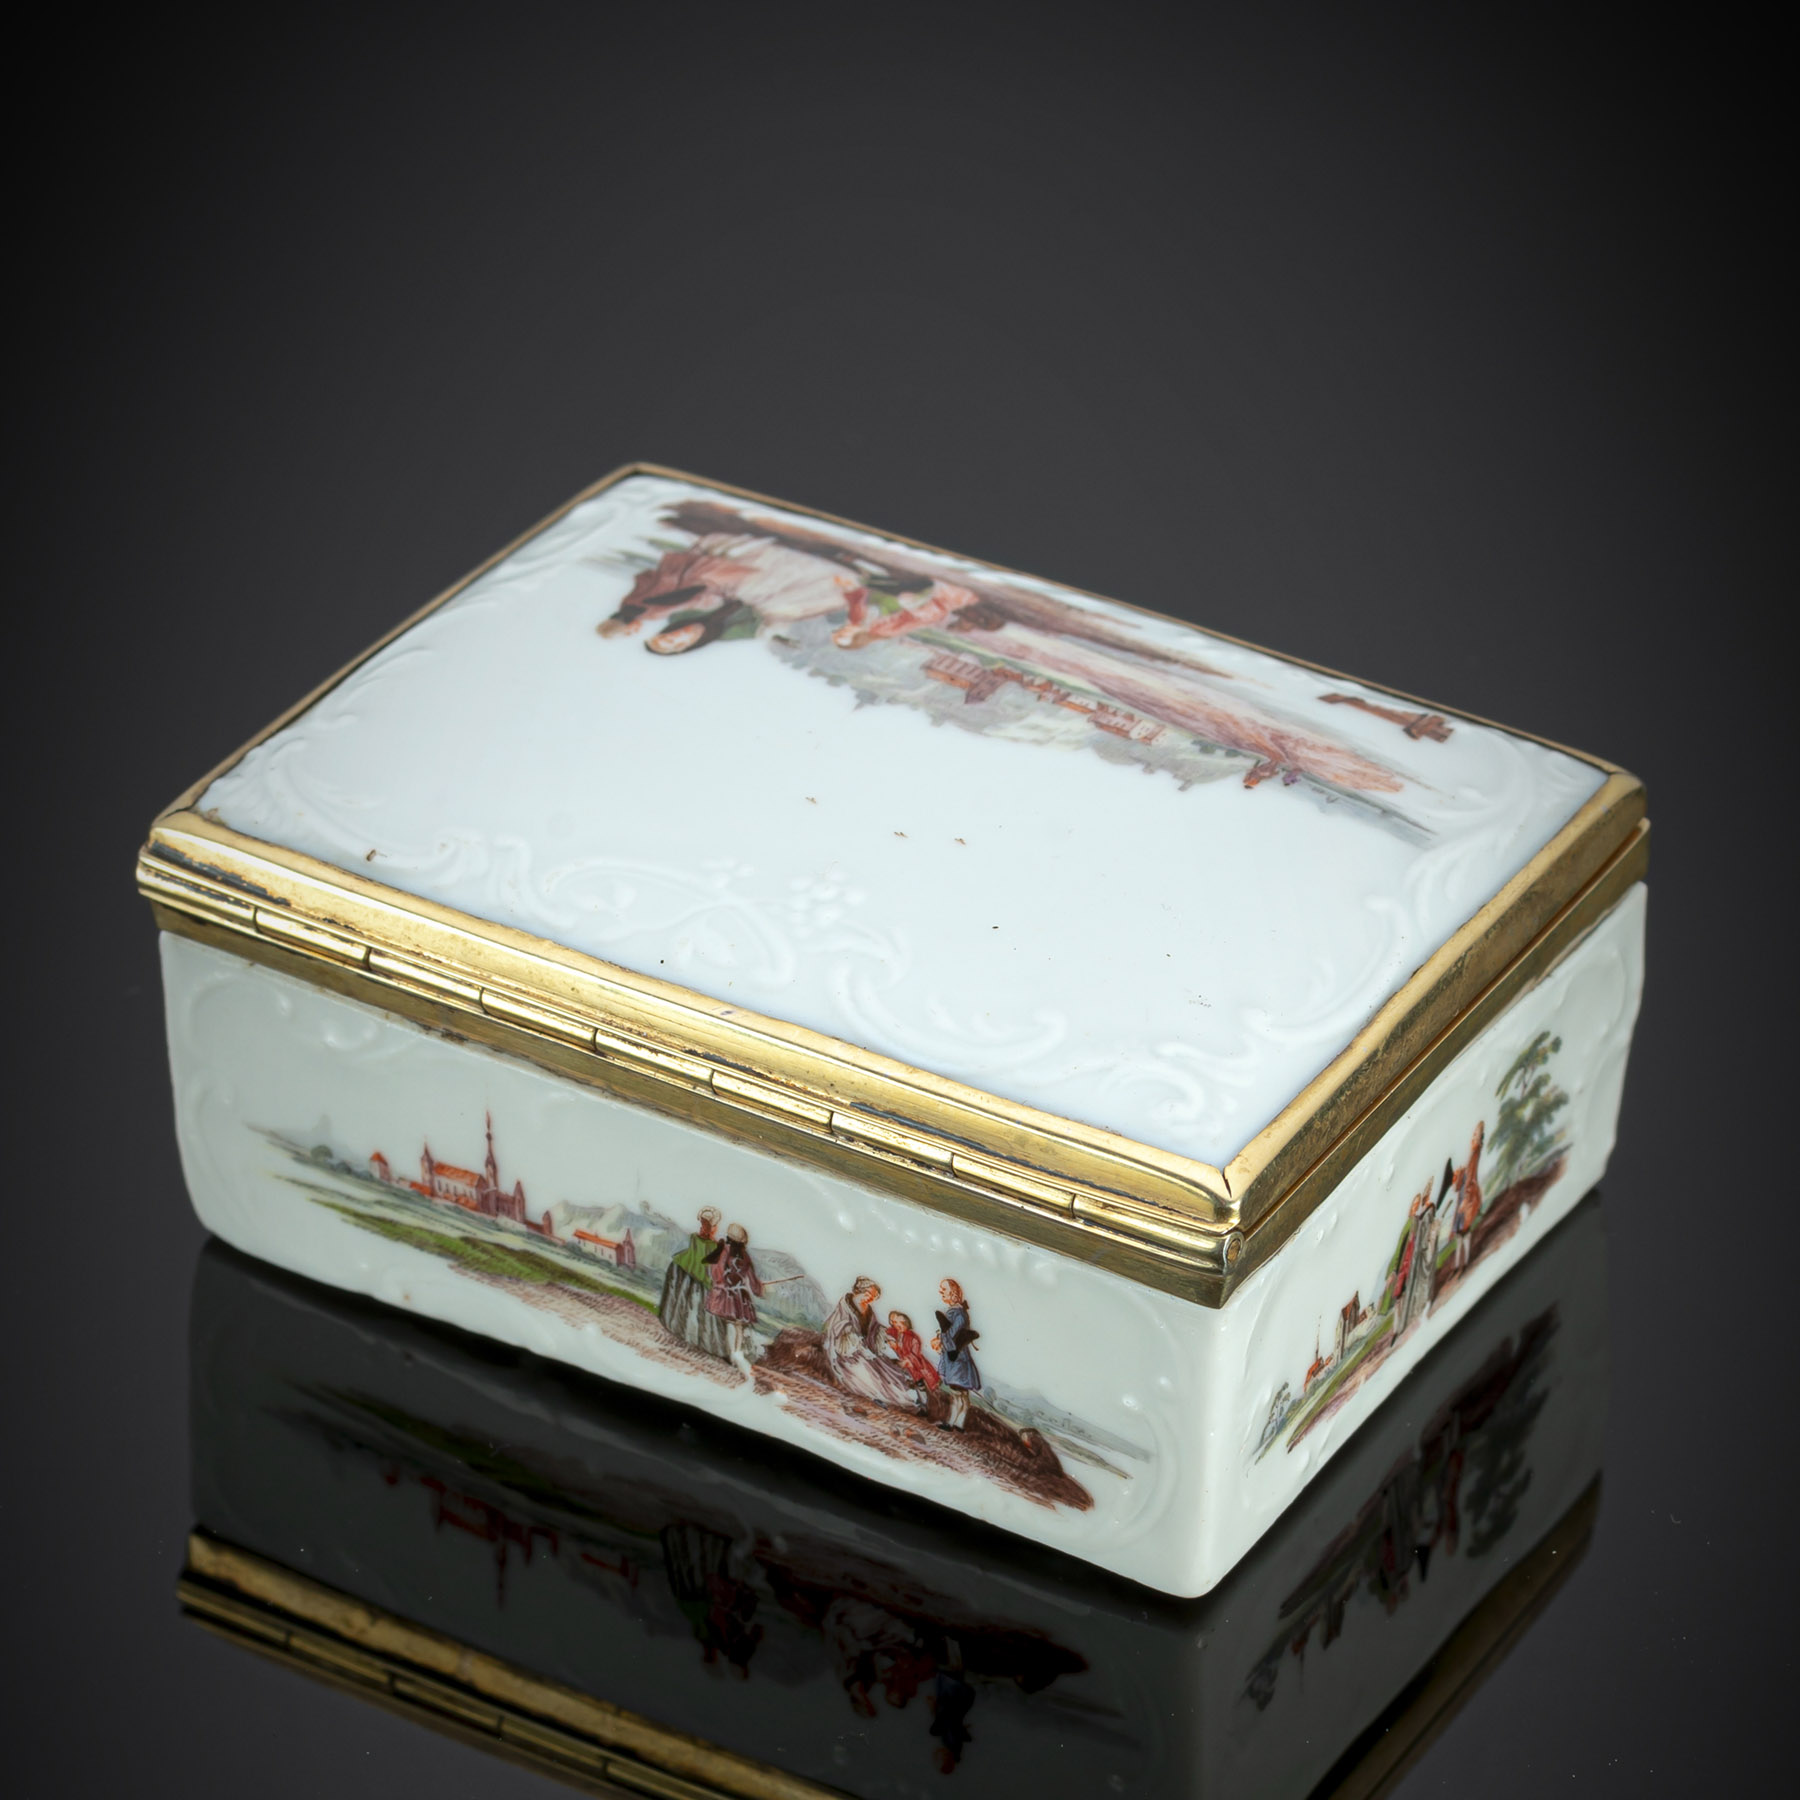 A FINE MEISSEN PORCELAIN SNUFF BOX WITH WATTEAU SCENES - Image 2 of 5